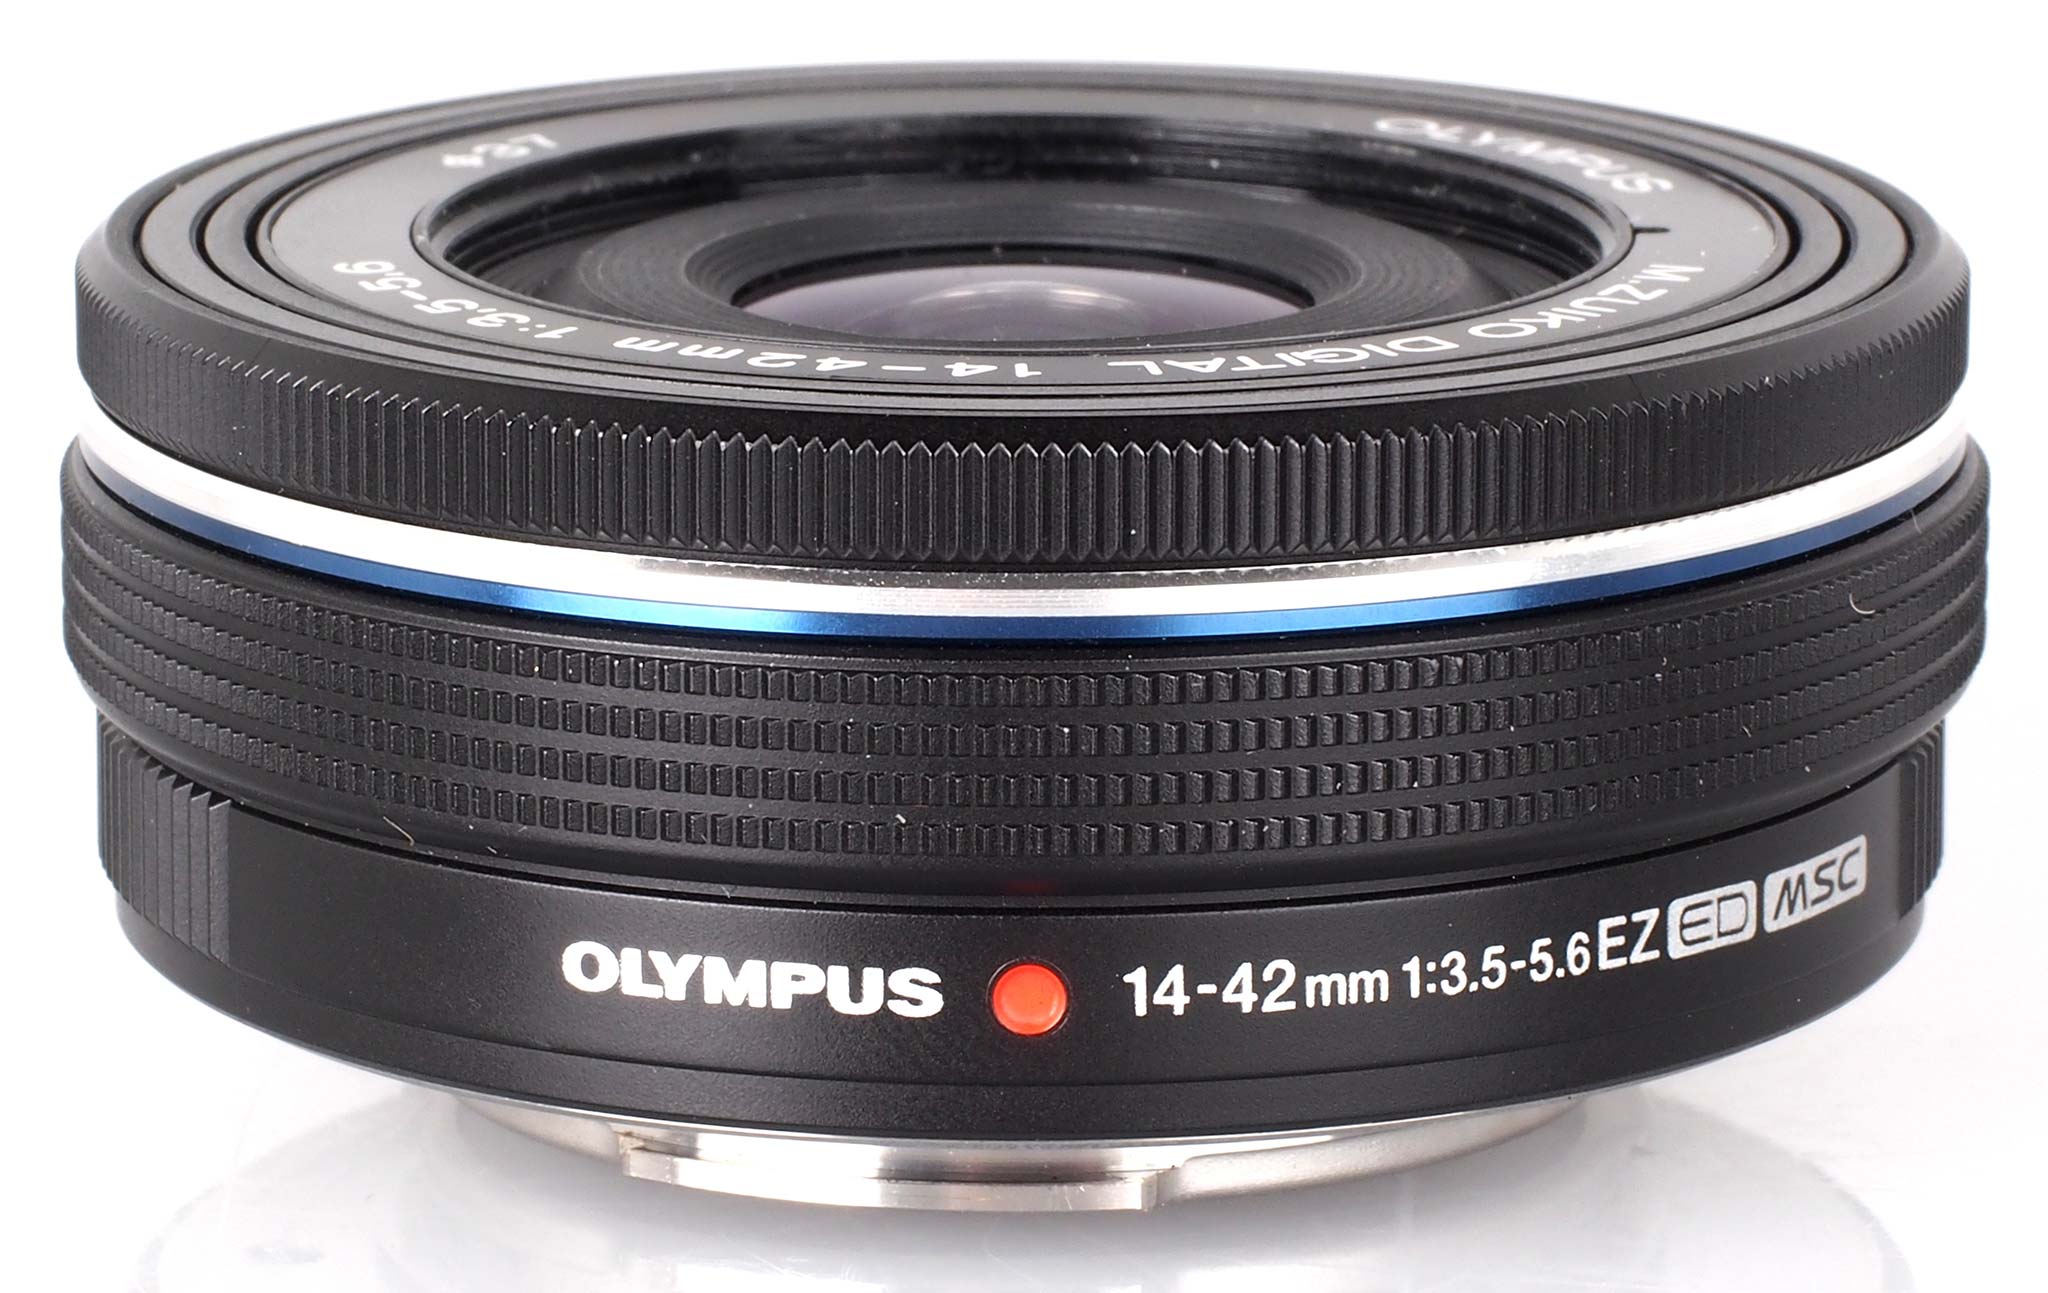 Đang tải highres-Olympus-M-Zuiko-14-42mm-ED-EZ-MSC-Lens-2_1393338488.jpg…